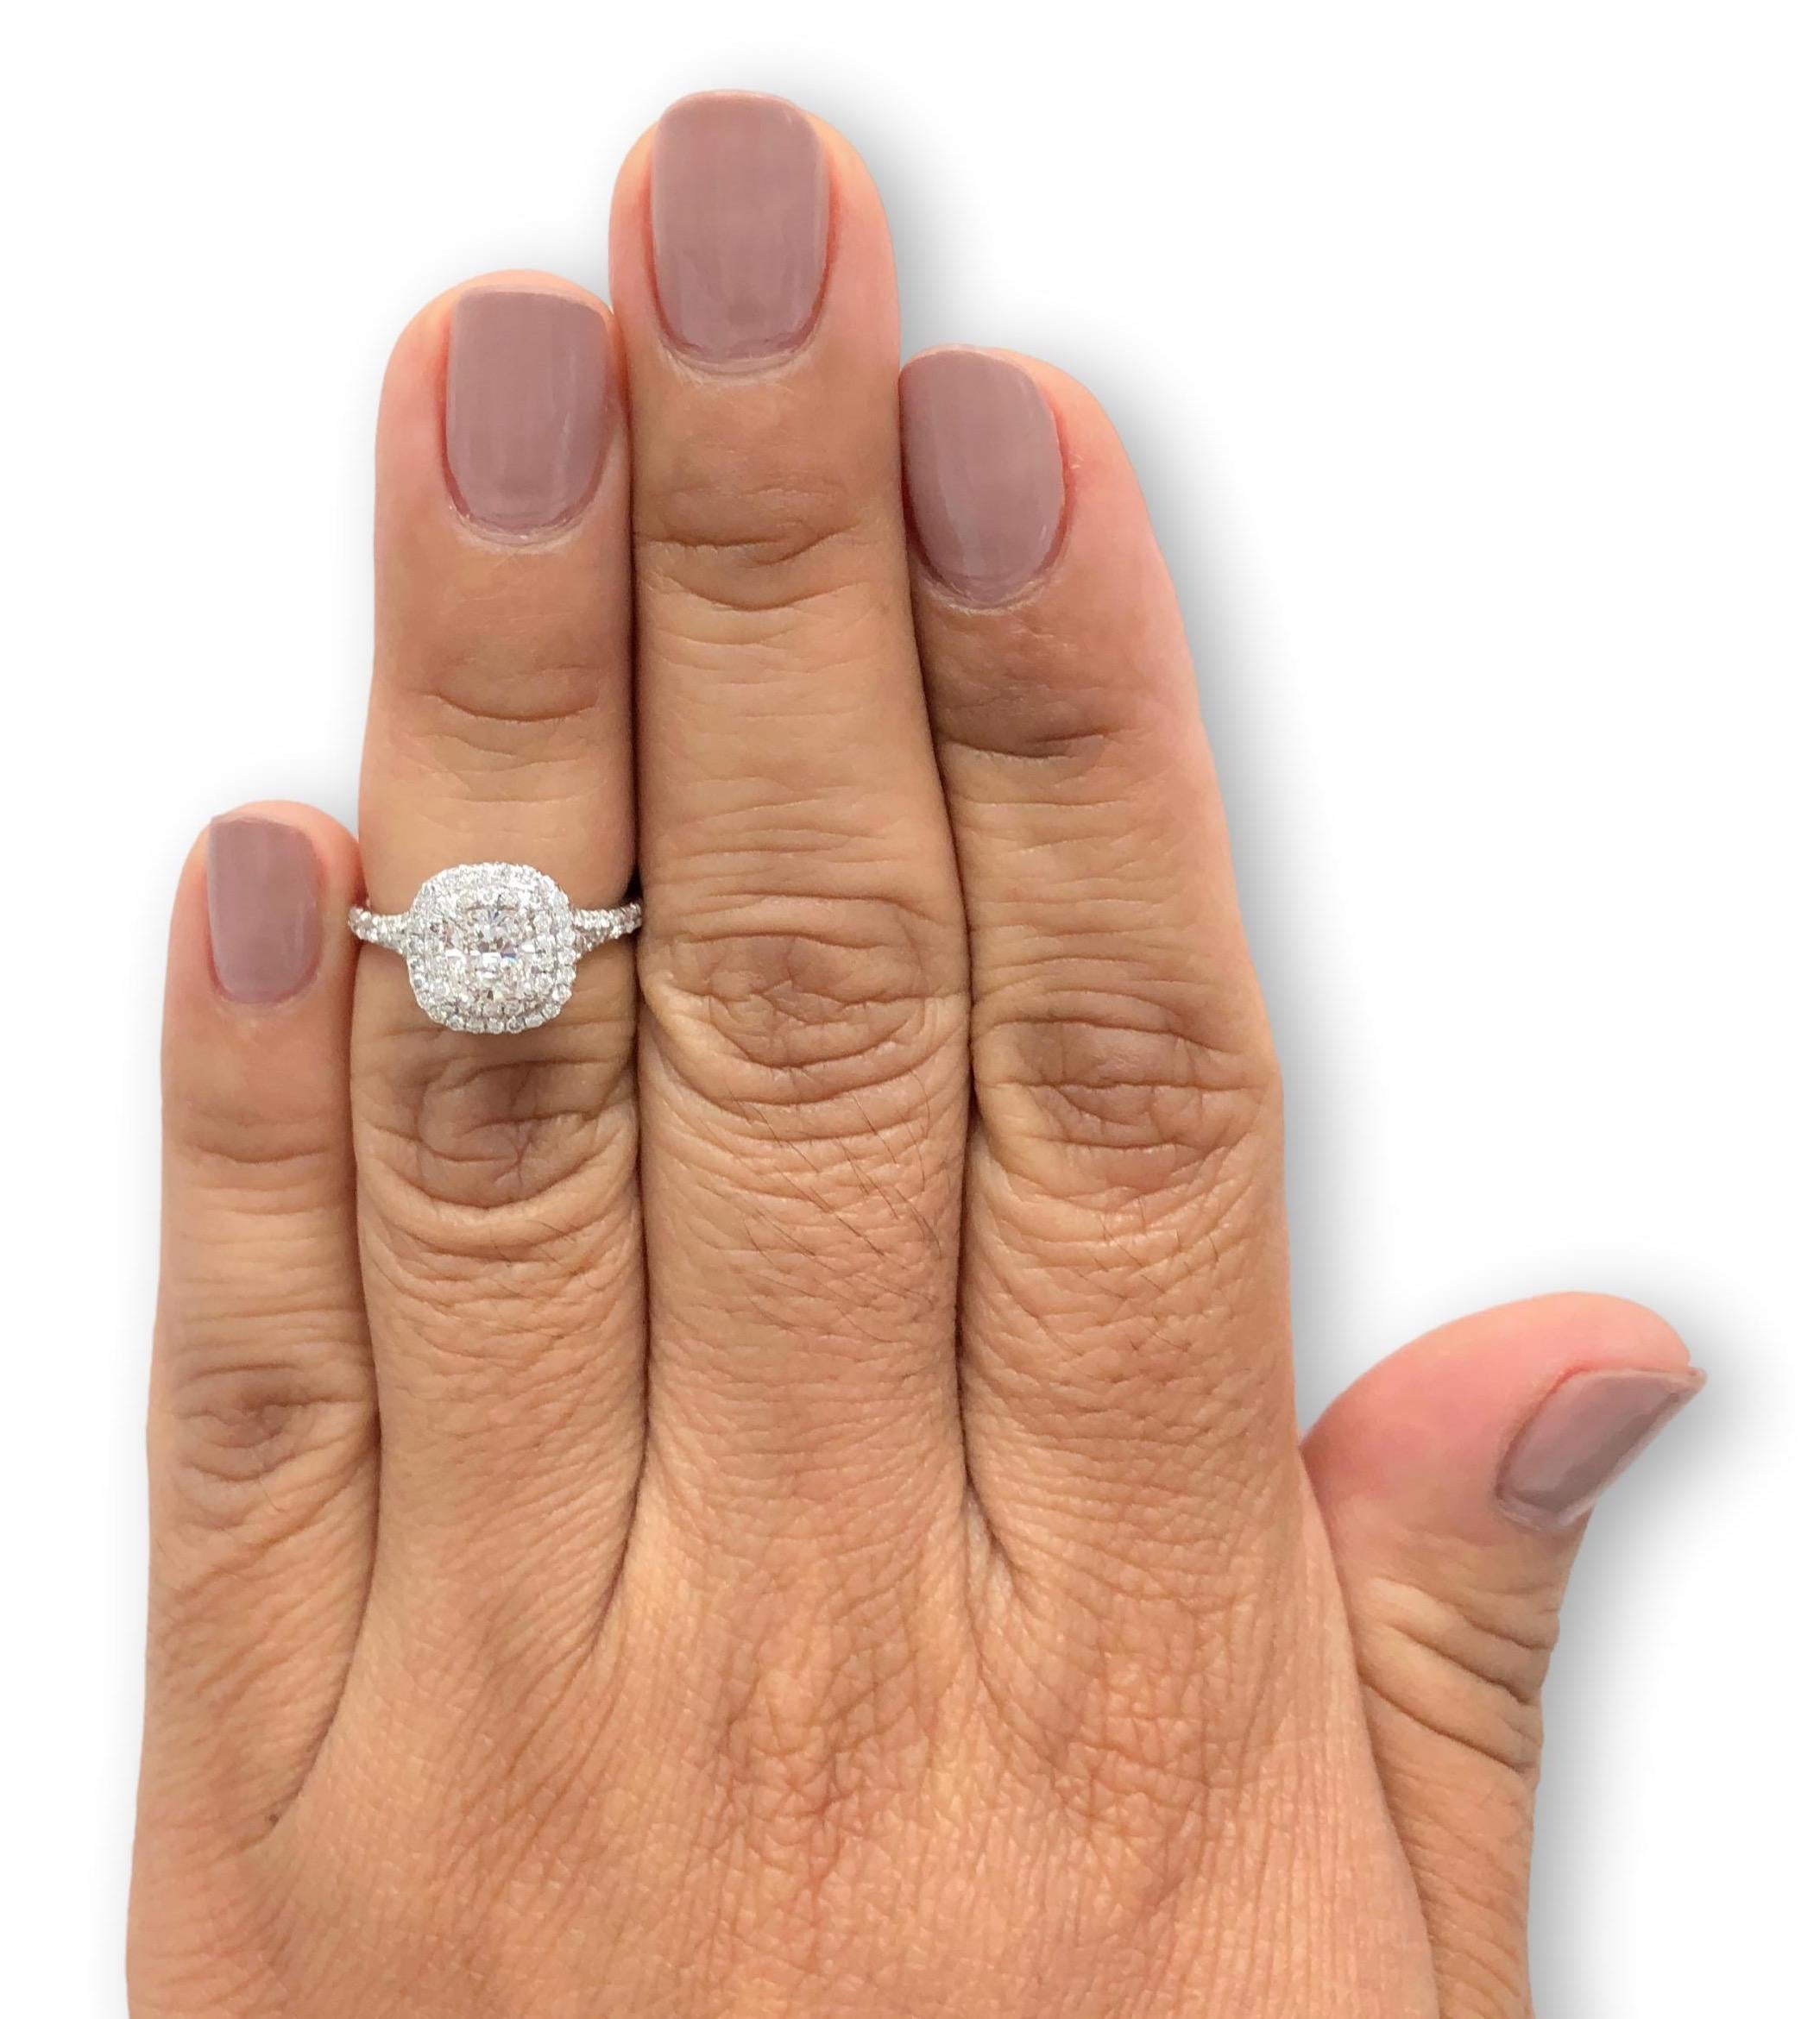 Tiffany & Co. Soleste Platinum Cushion Diamond Engagement Ring .98Cts Ttl. H IF 5